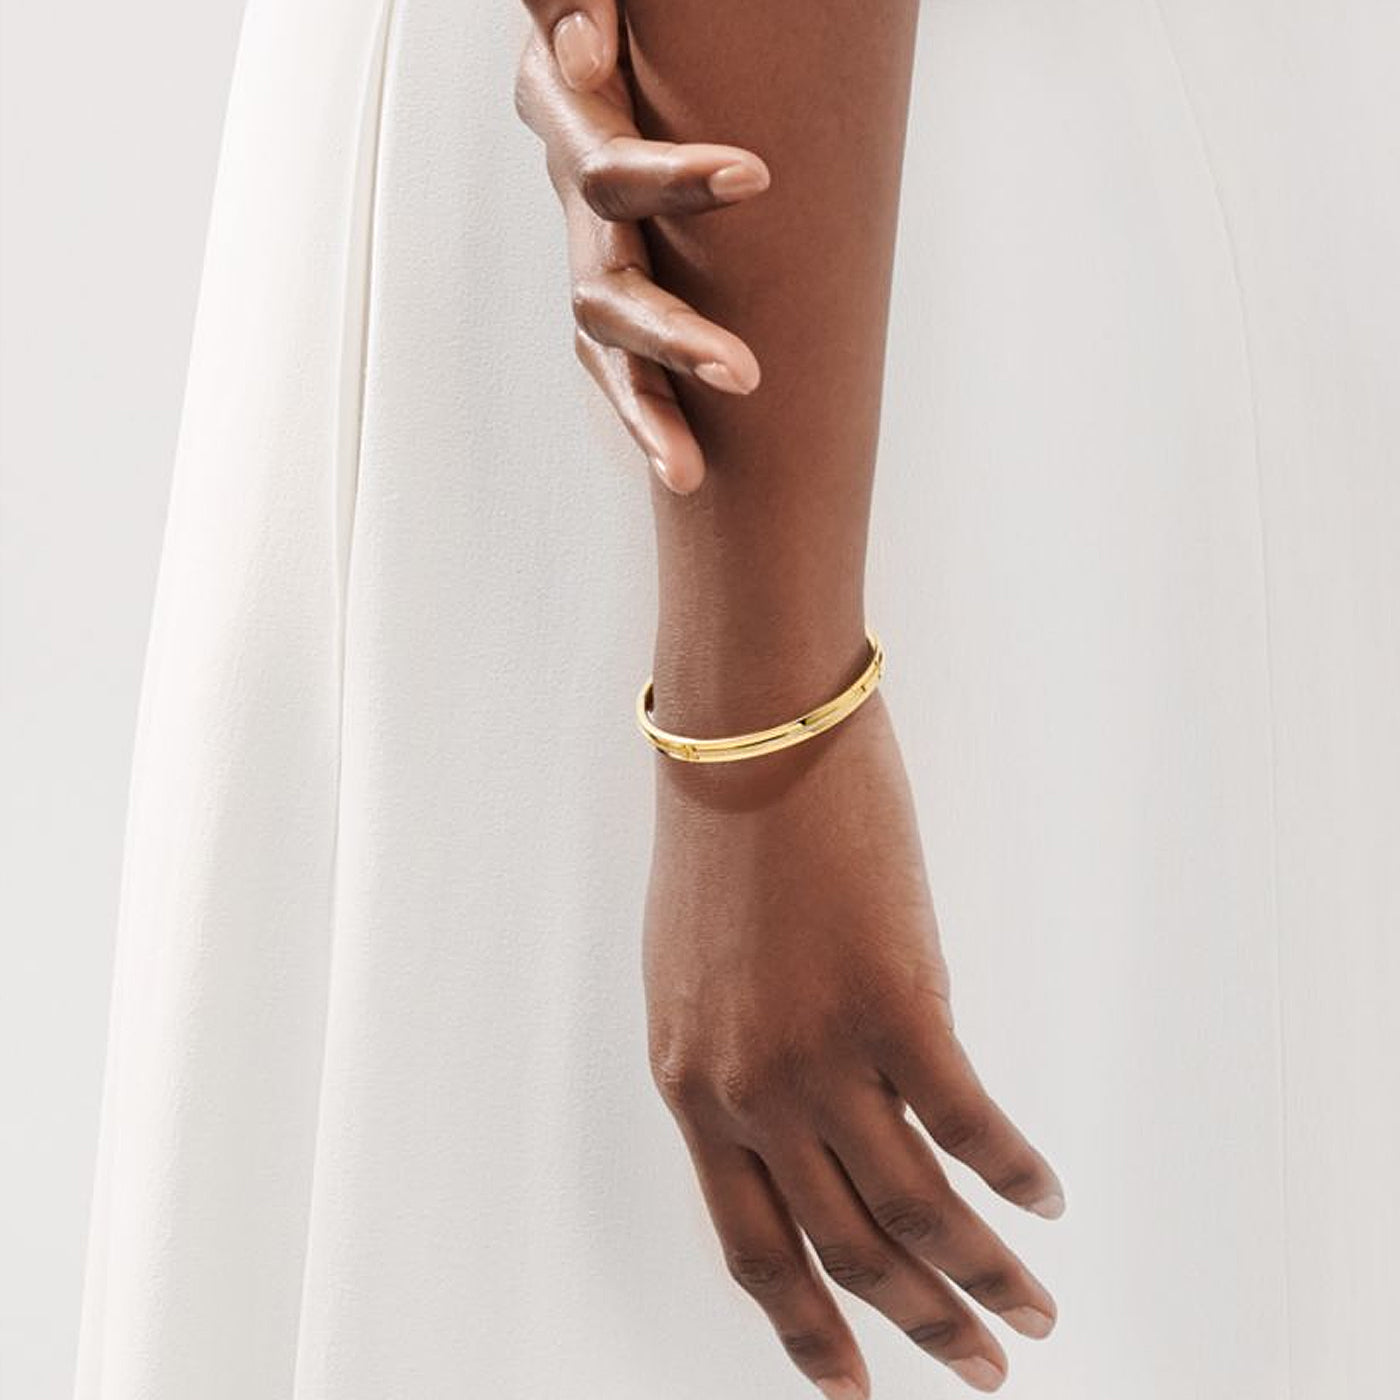 Tiffany & Co T Diamond Hinged Bangle 18k Yellow Gold Bracelet